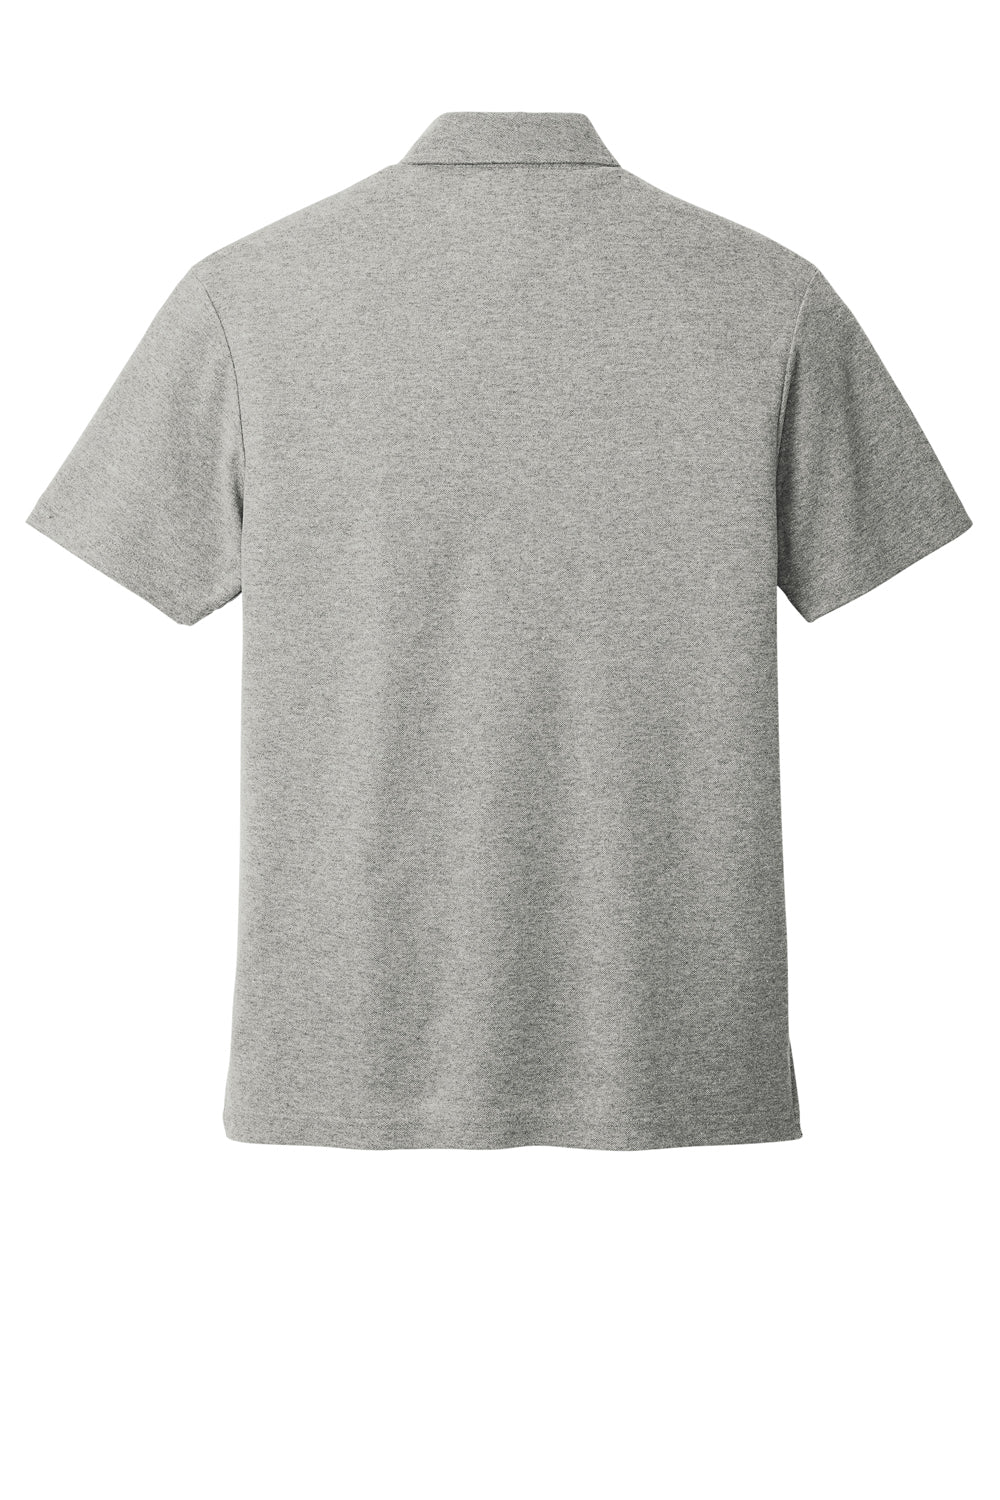 Port Authority K868 Mens C-FREE Pique Short Sleeve Polo Shirt w/ Pocket Heather Deep Smoke Grey Flat Back